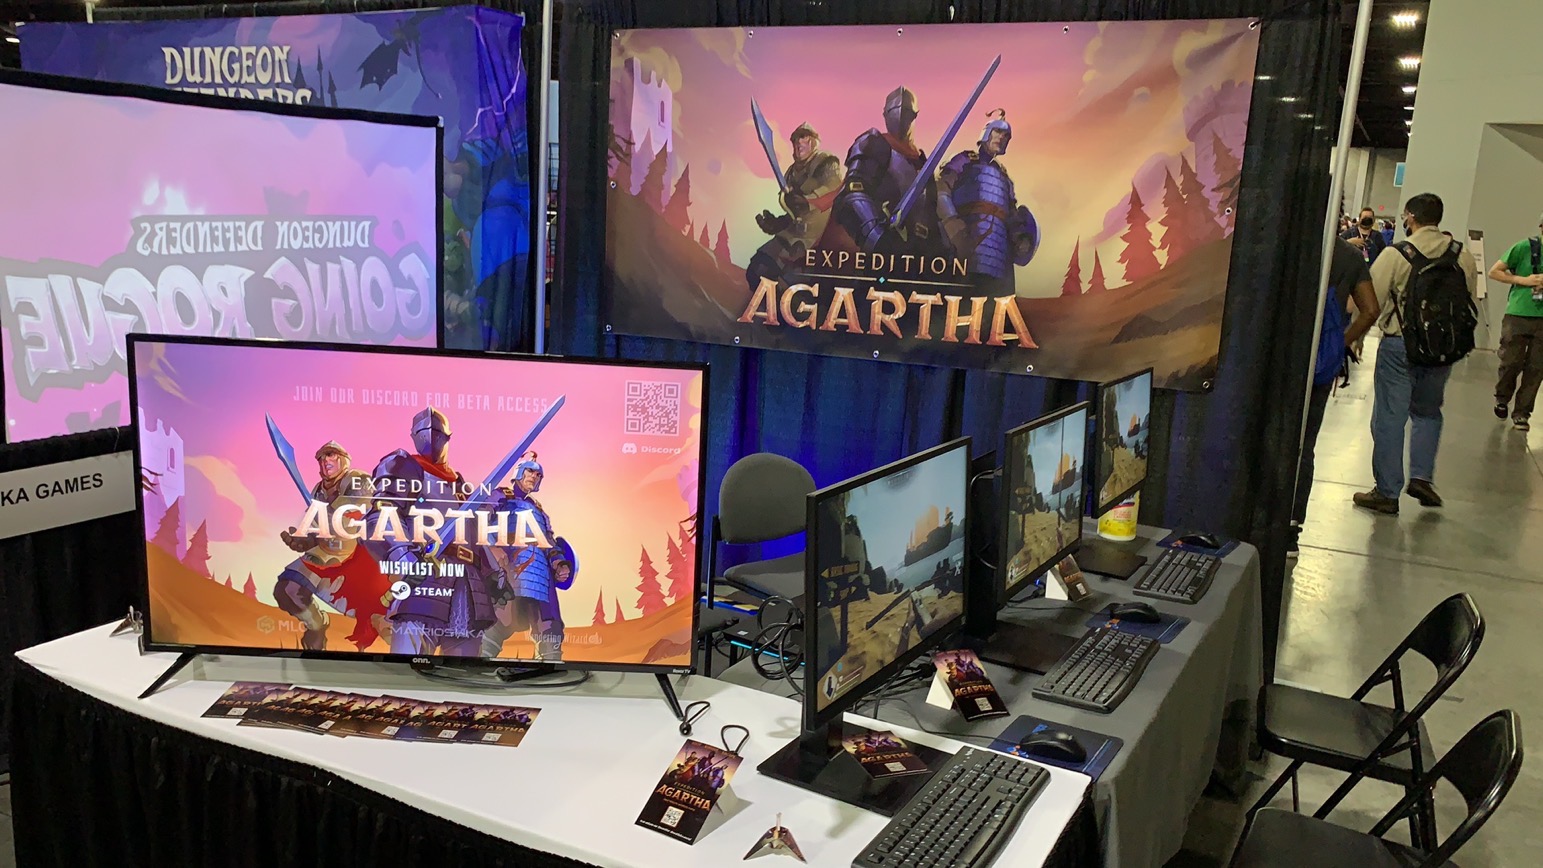 Matrioshka Games exhibiting Expedition Agartha